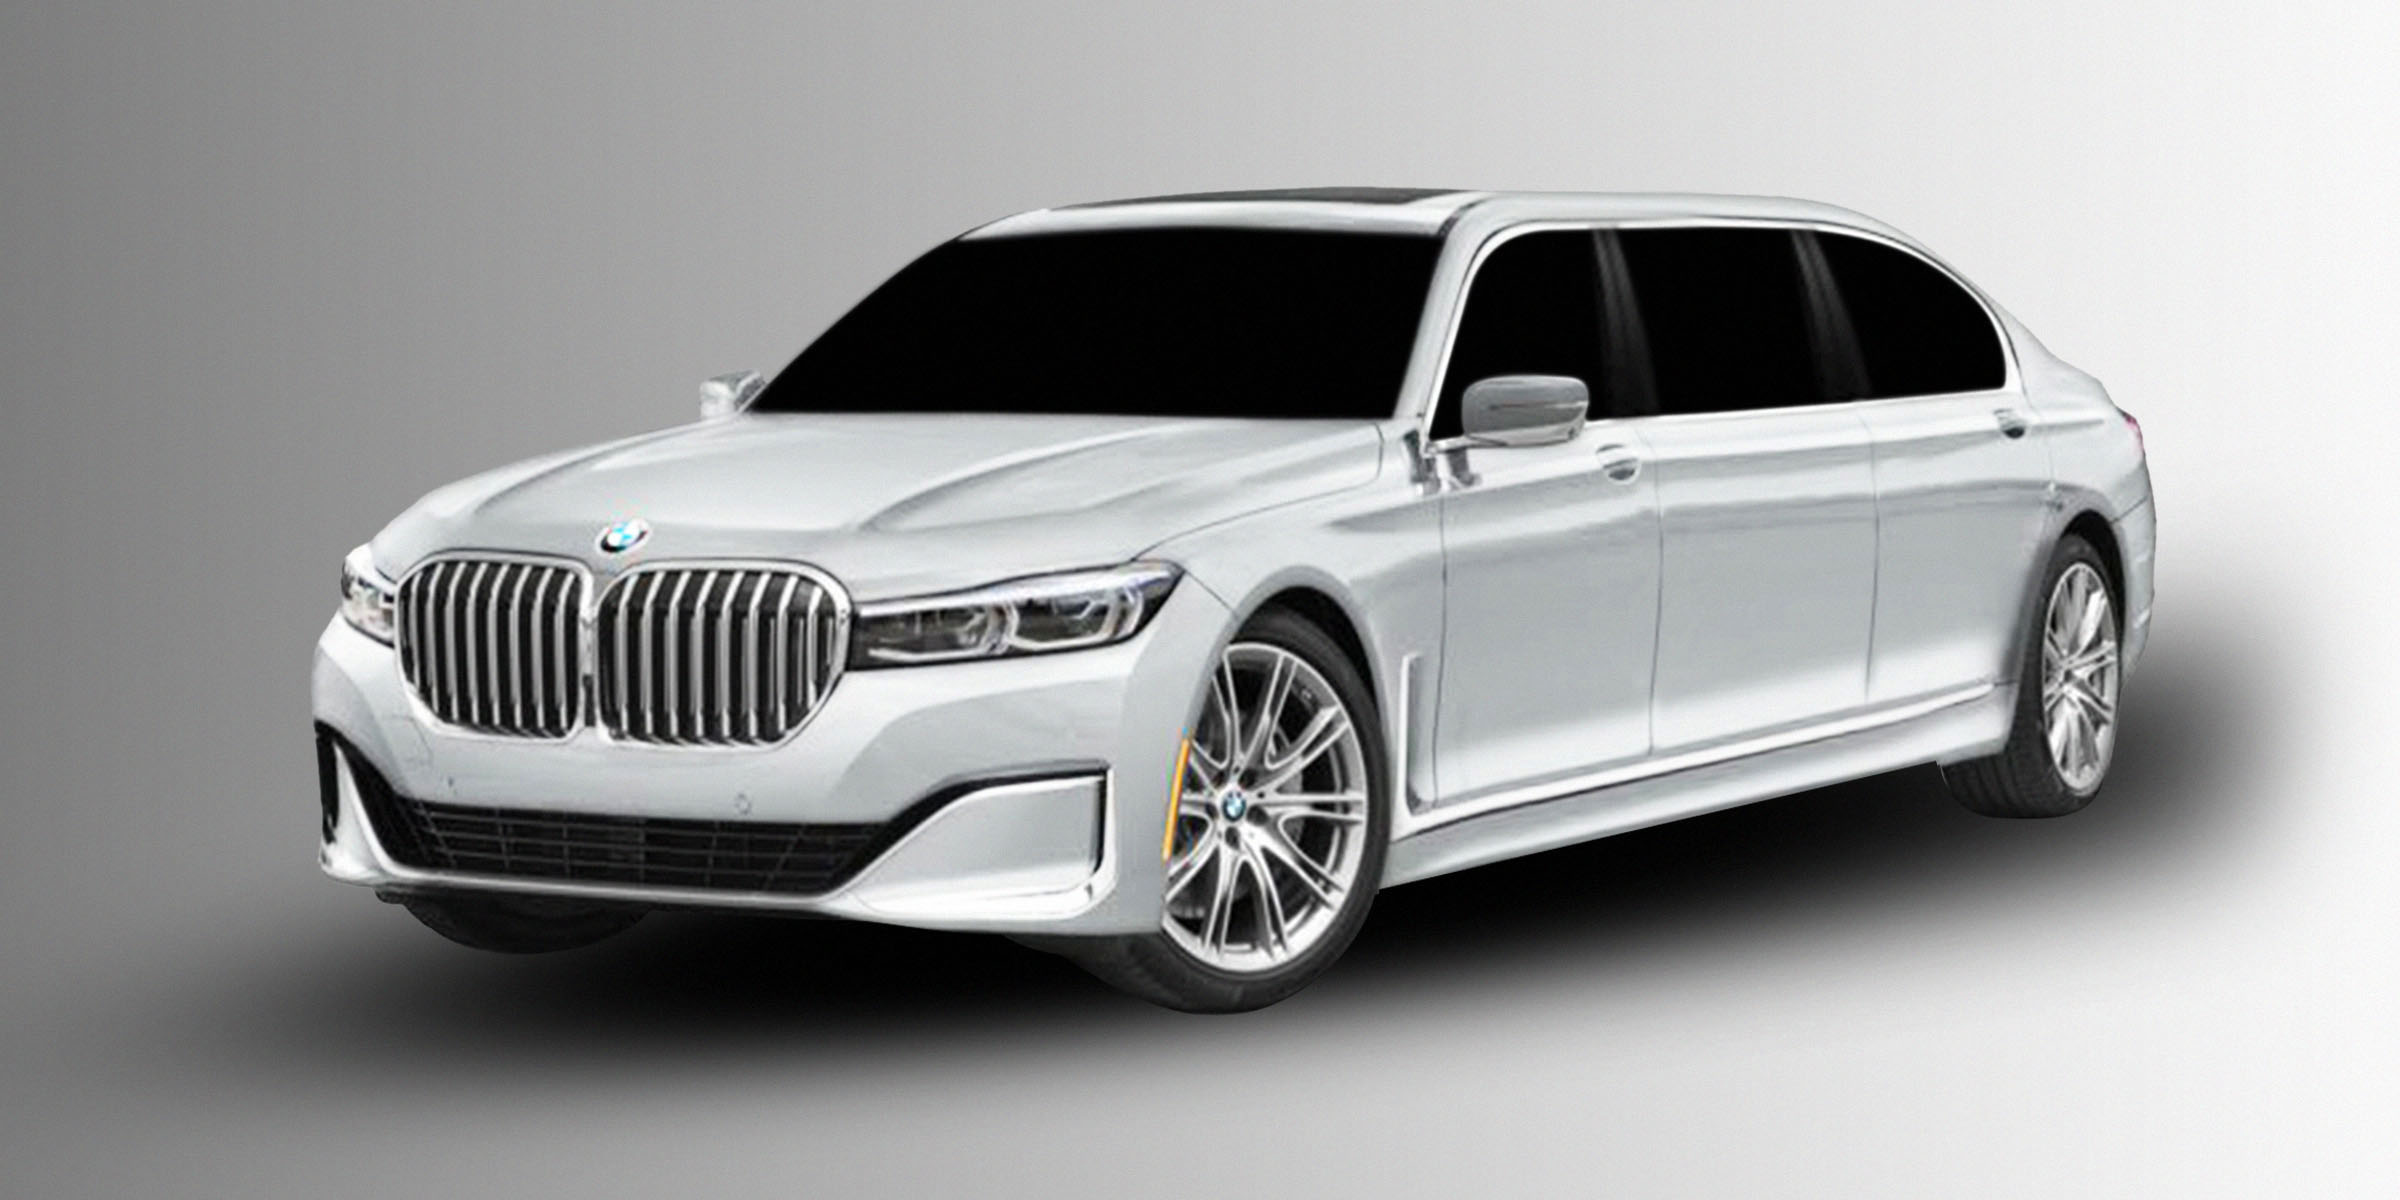 https://limousinesworld.com/usa/wp-content/uploads/2021/03/BMW-LAMBO-WHITE-COLOR-1.jpeg